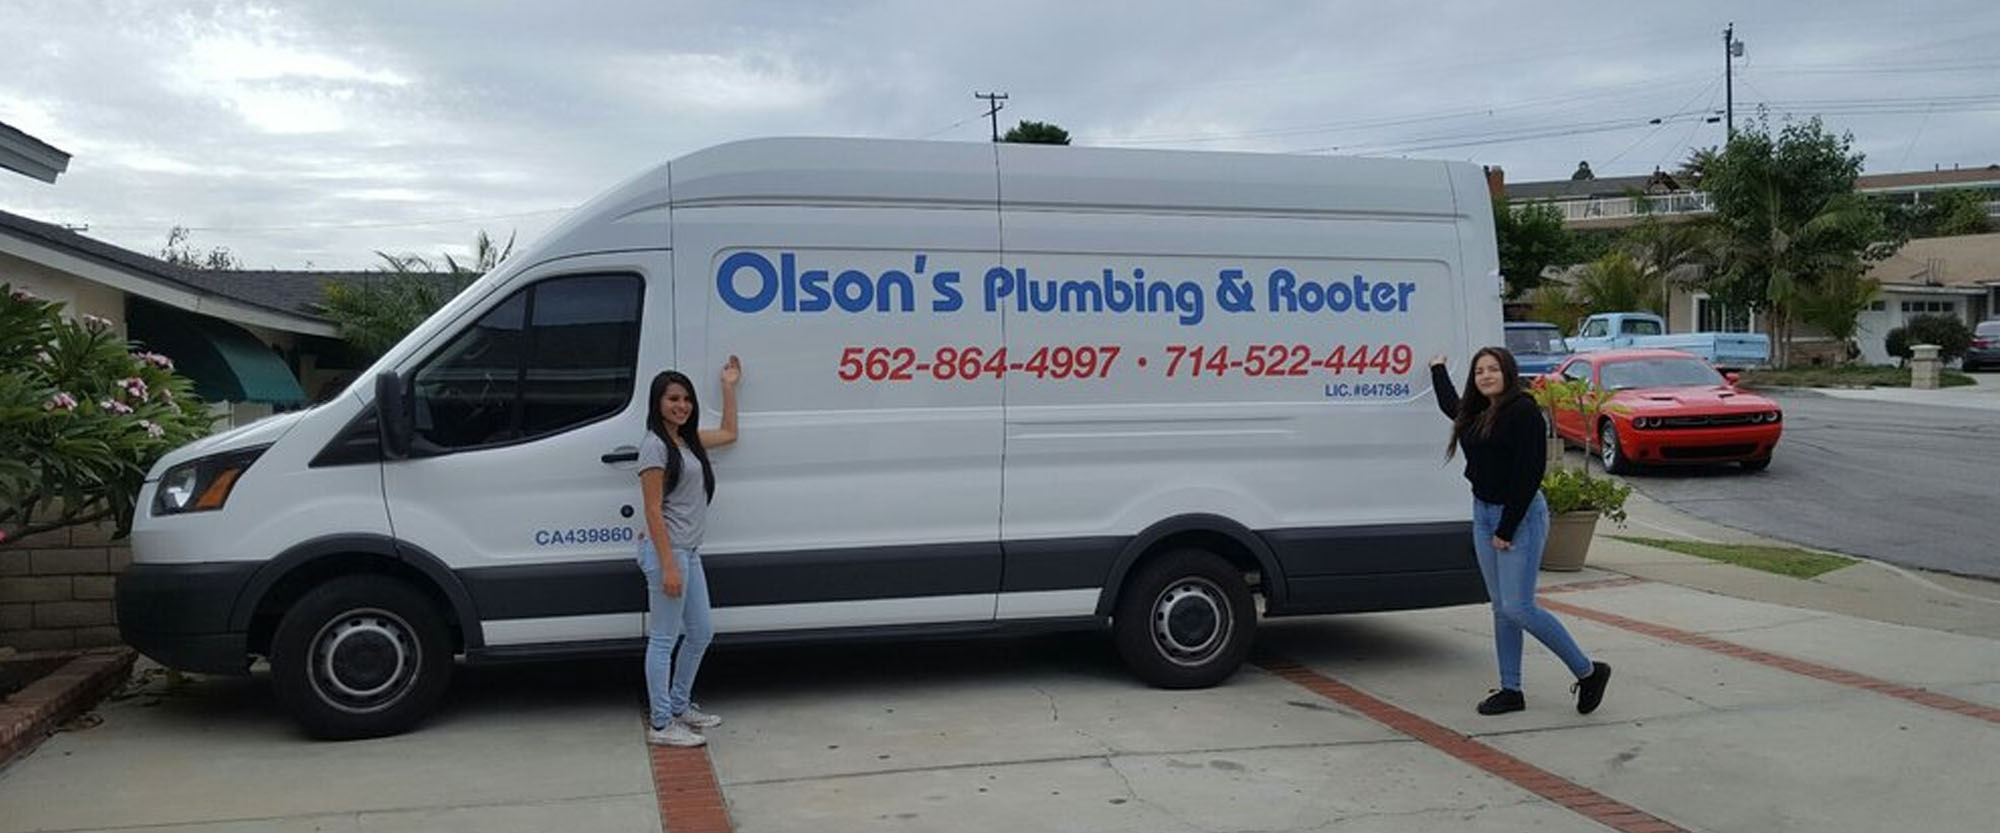 Olsons Plumbing & Rooter